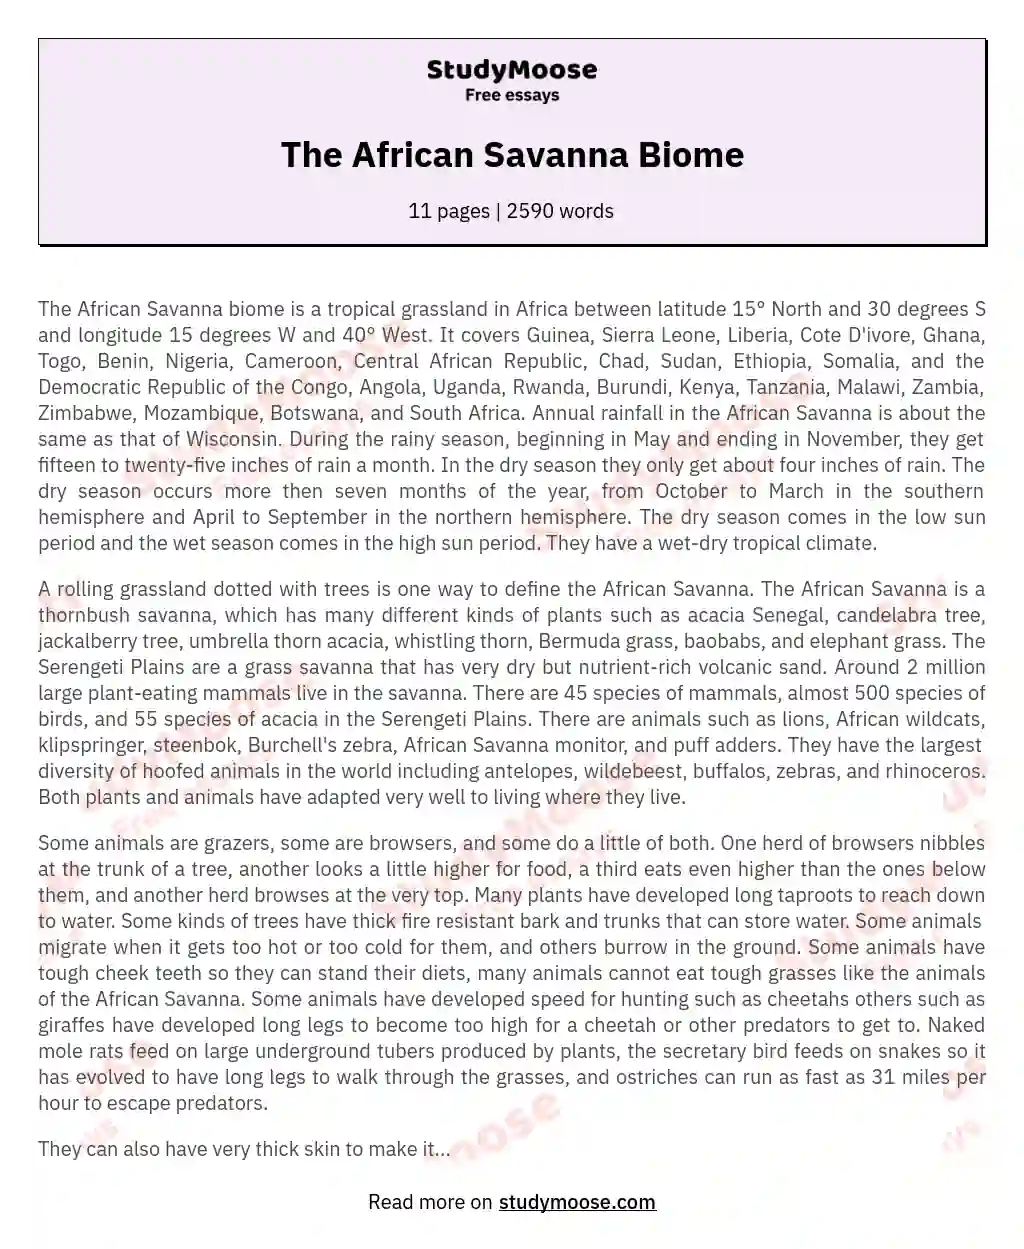 The African Savanna Biome essay